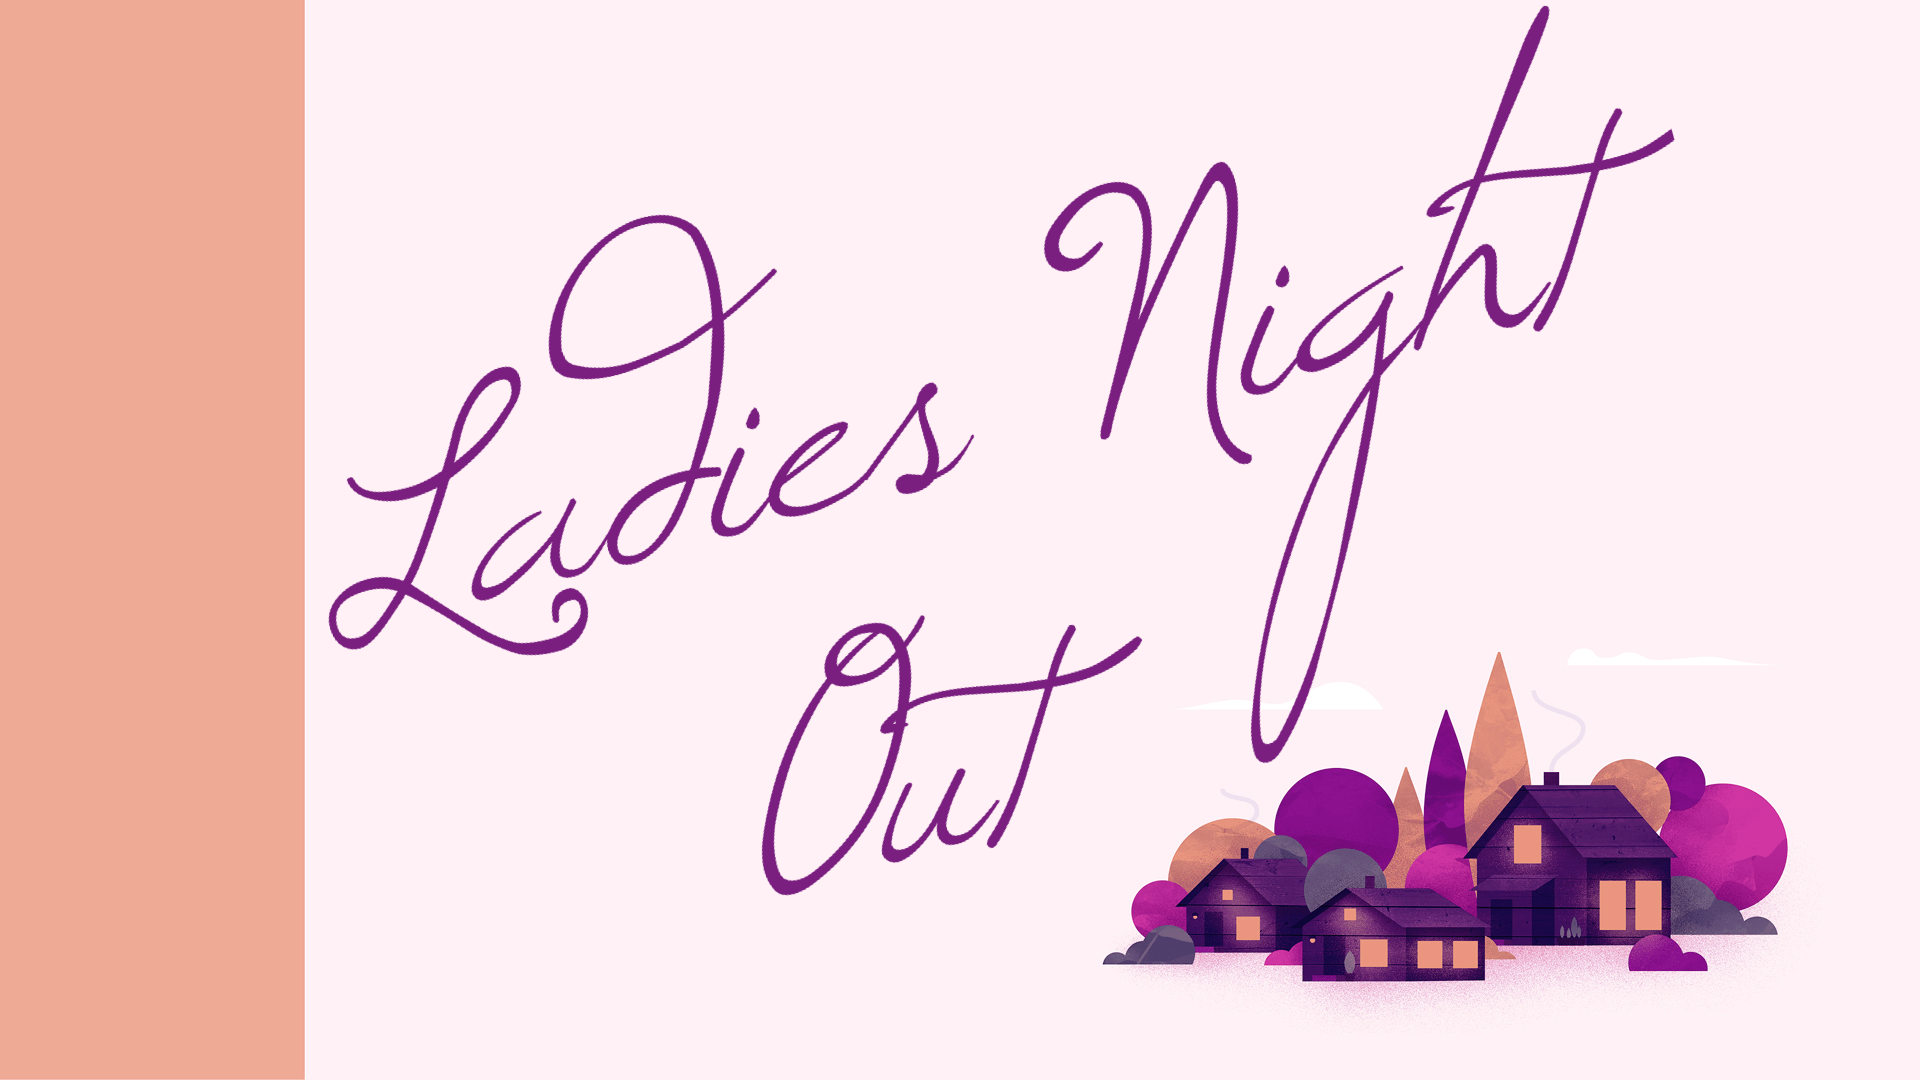 Ladies Night Out 1 image